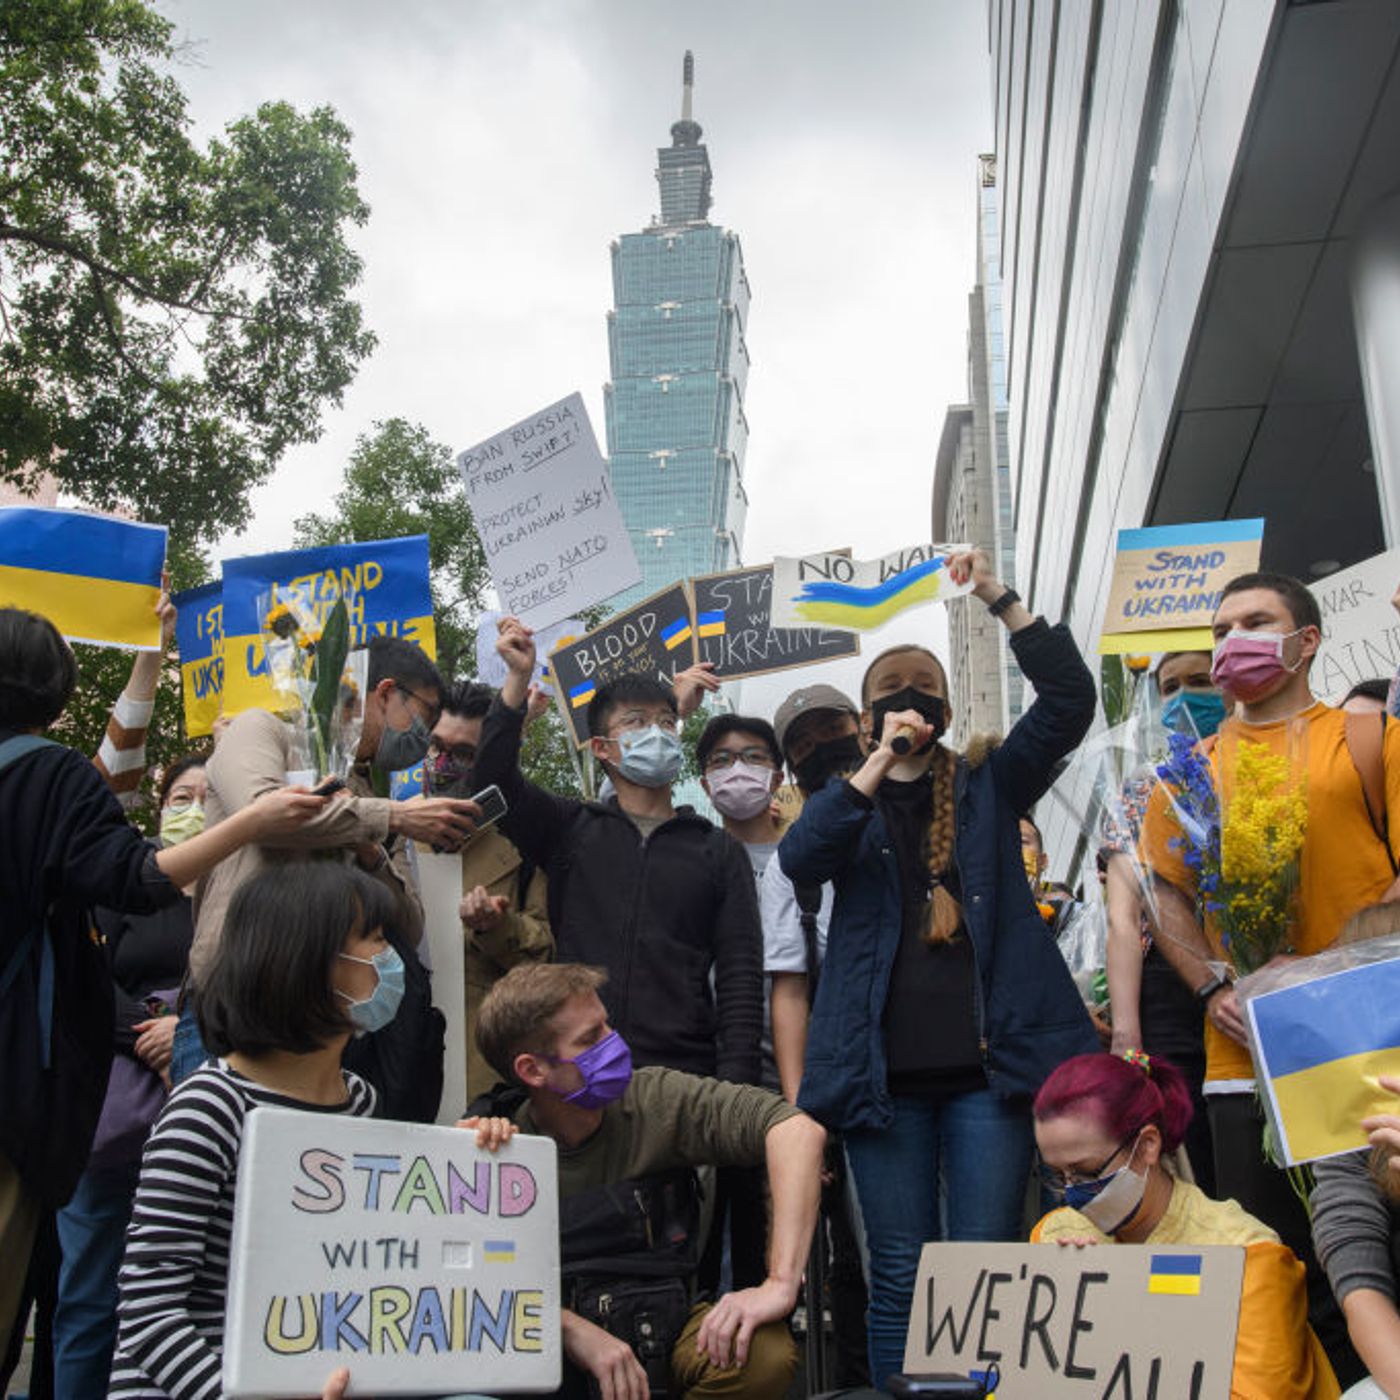 The Taiwanese view on Ukraine